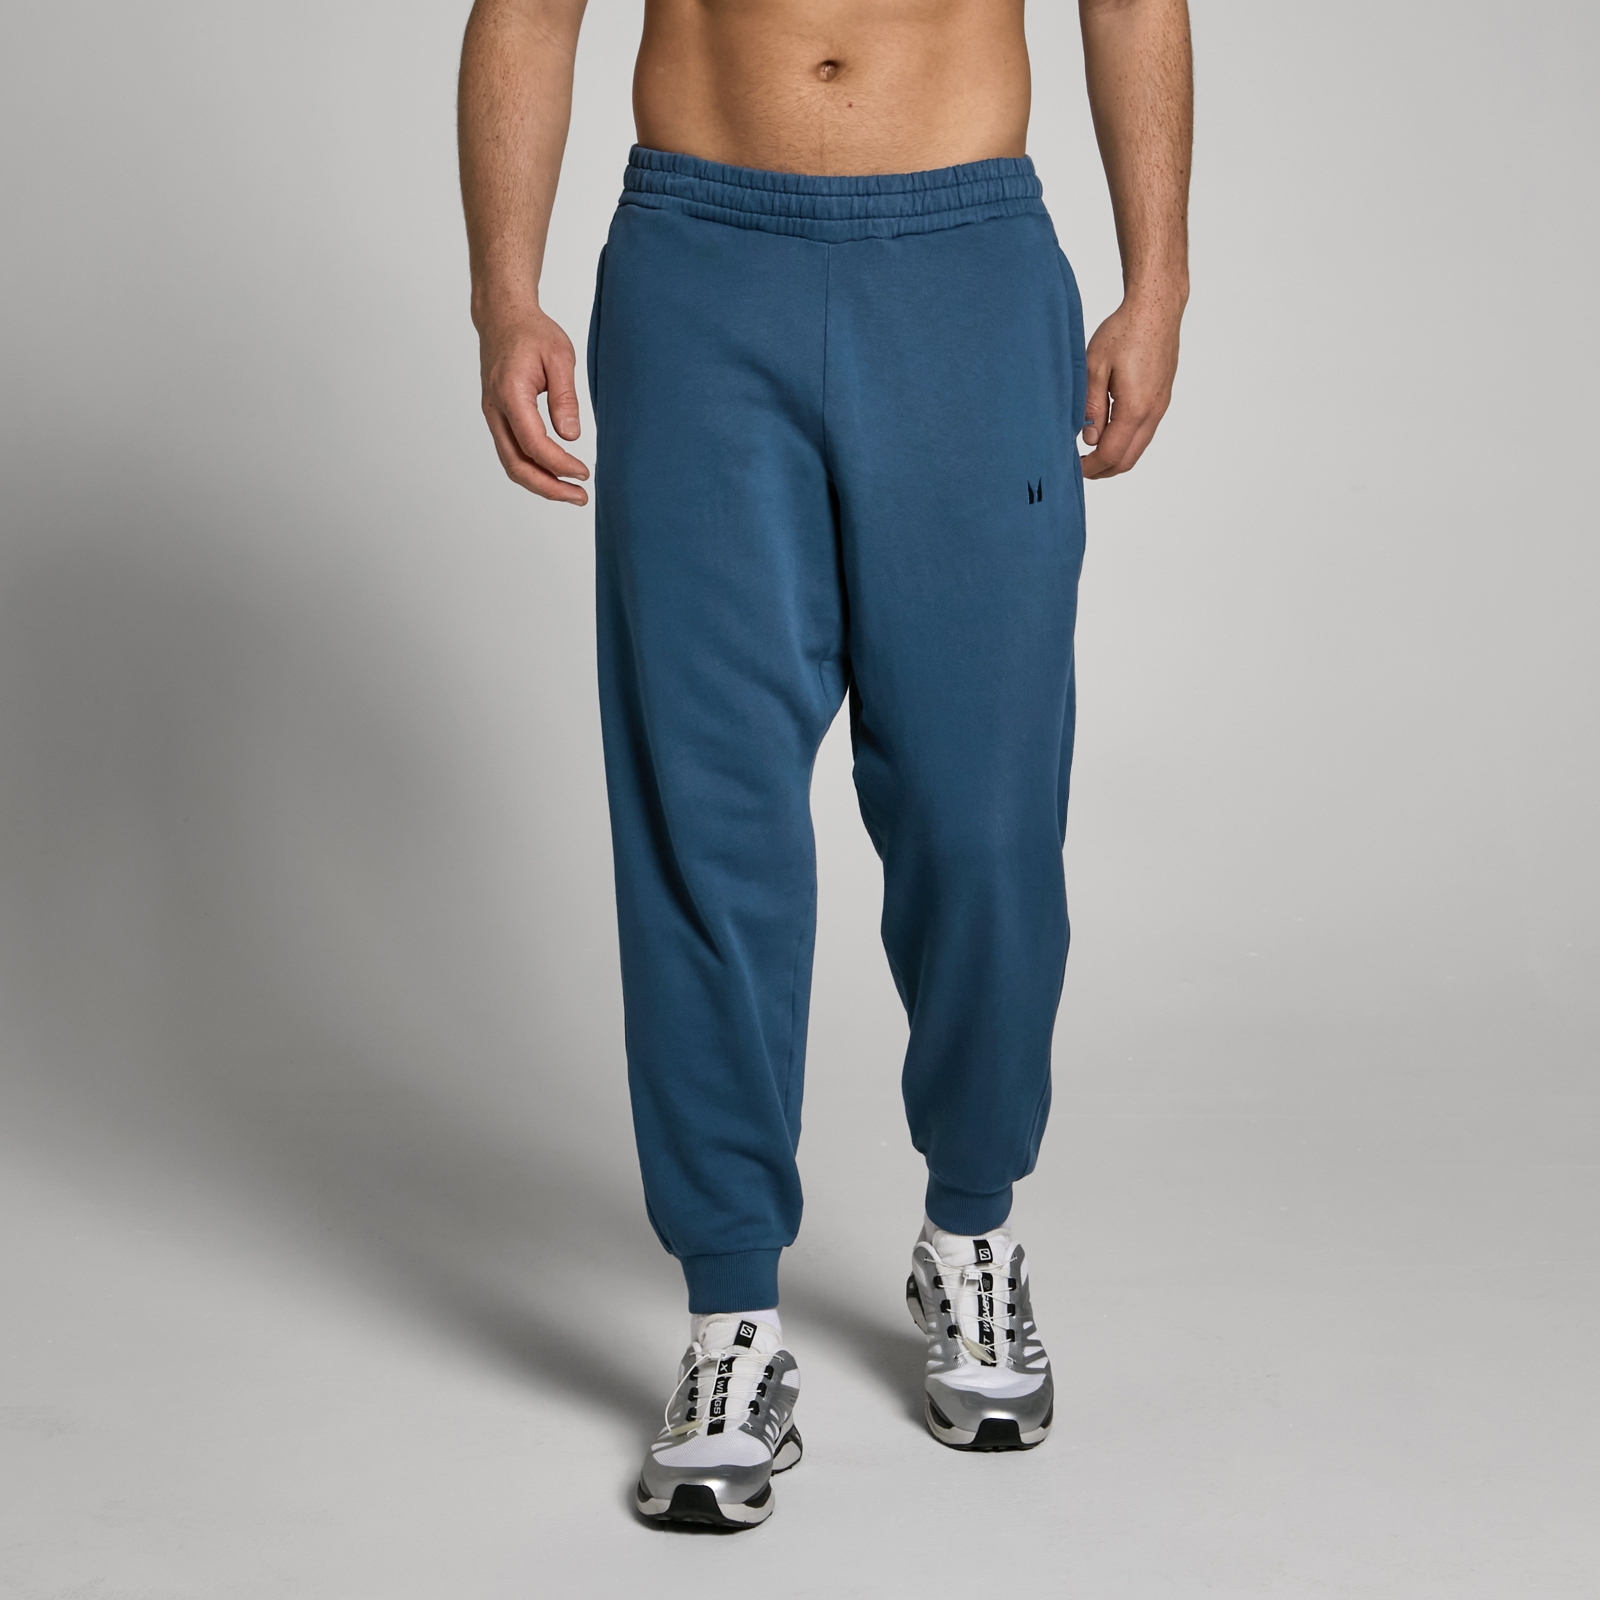 Image of Pantaloni da jogging slavati MP Tempo da uomo - Blu navy slavato - XS